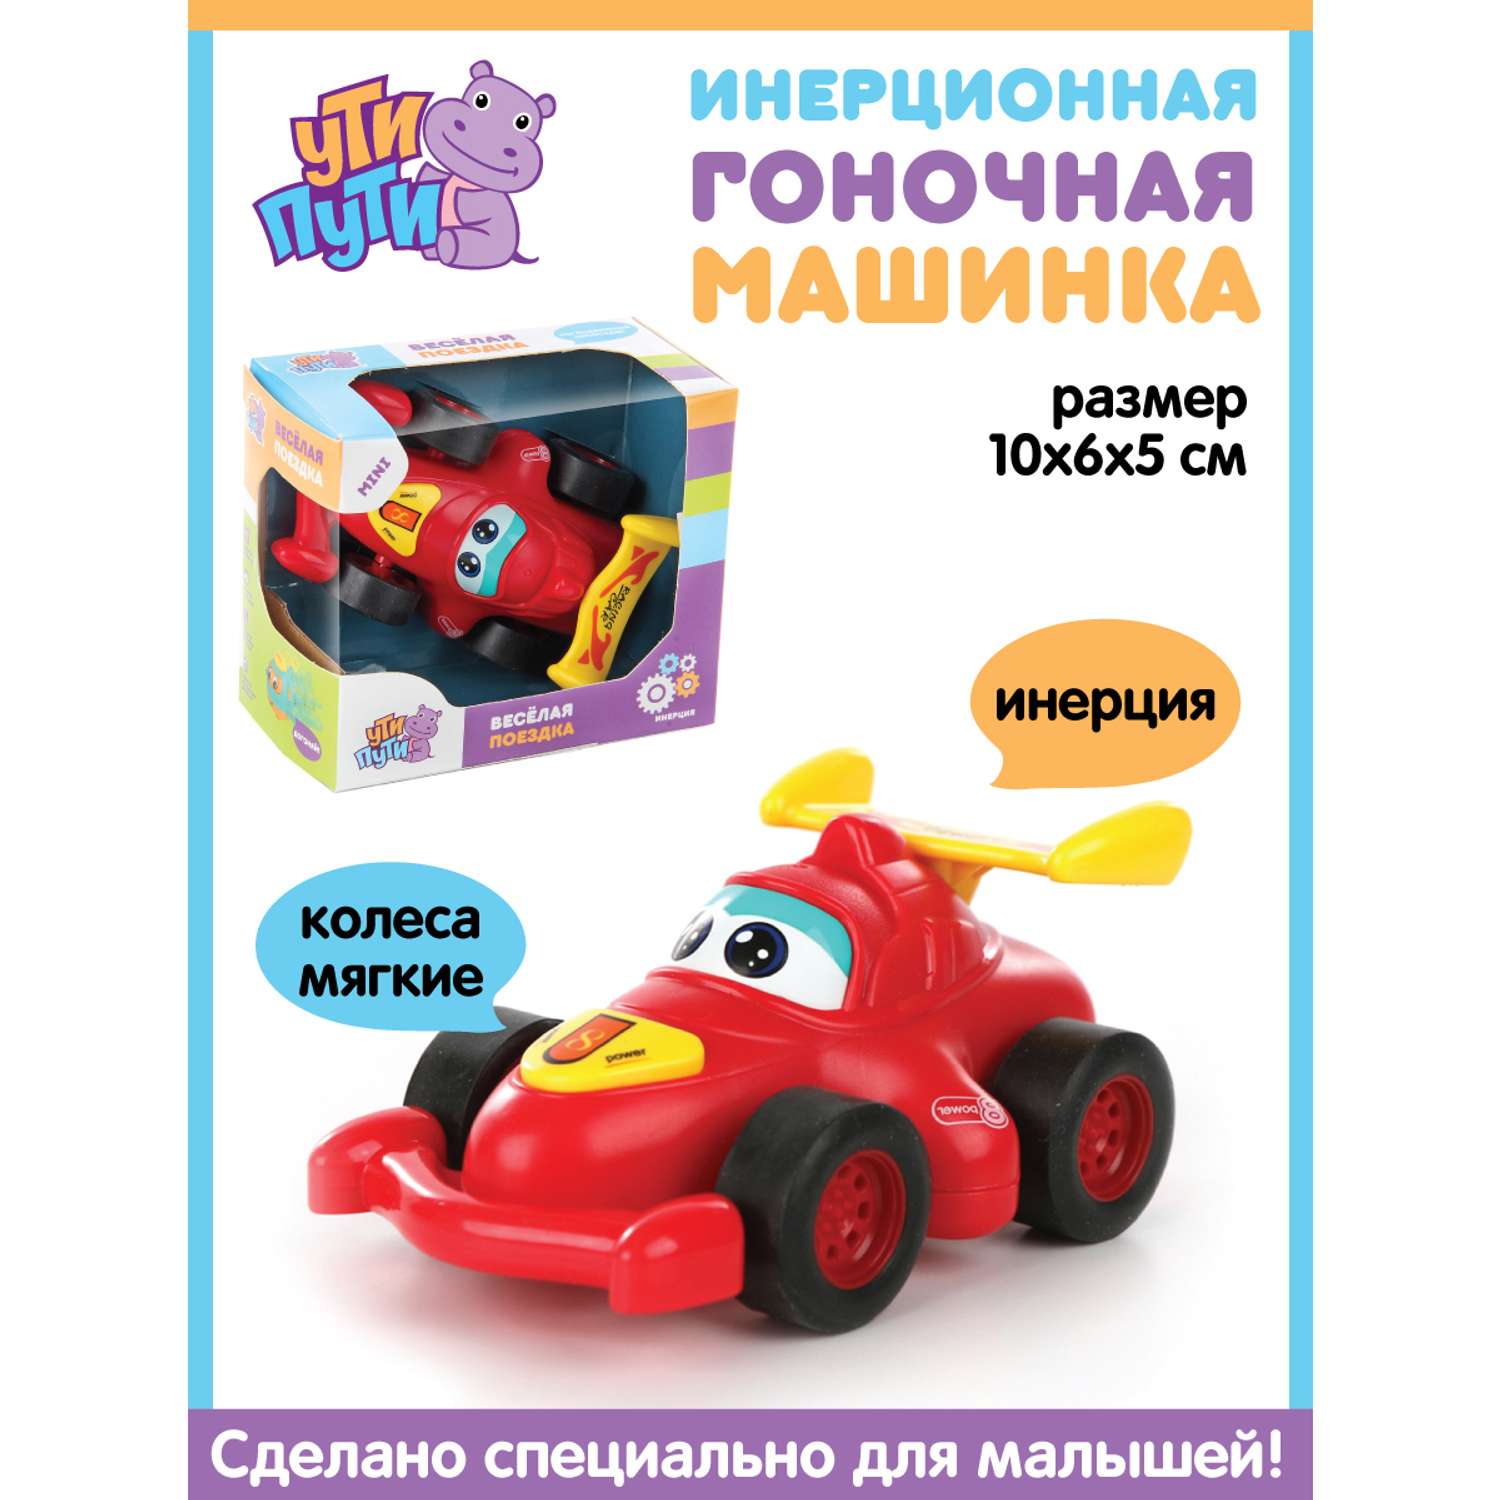 Развивающая игрушка Ути Пути гоночная машинка - фото 3